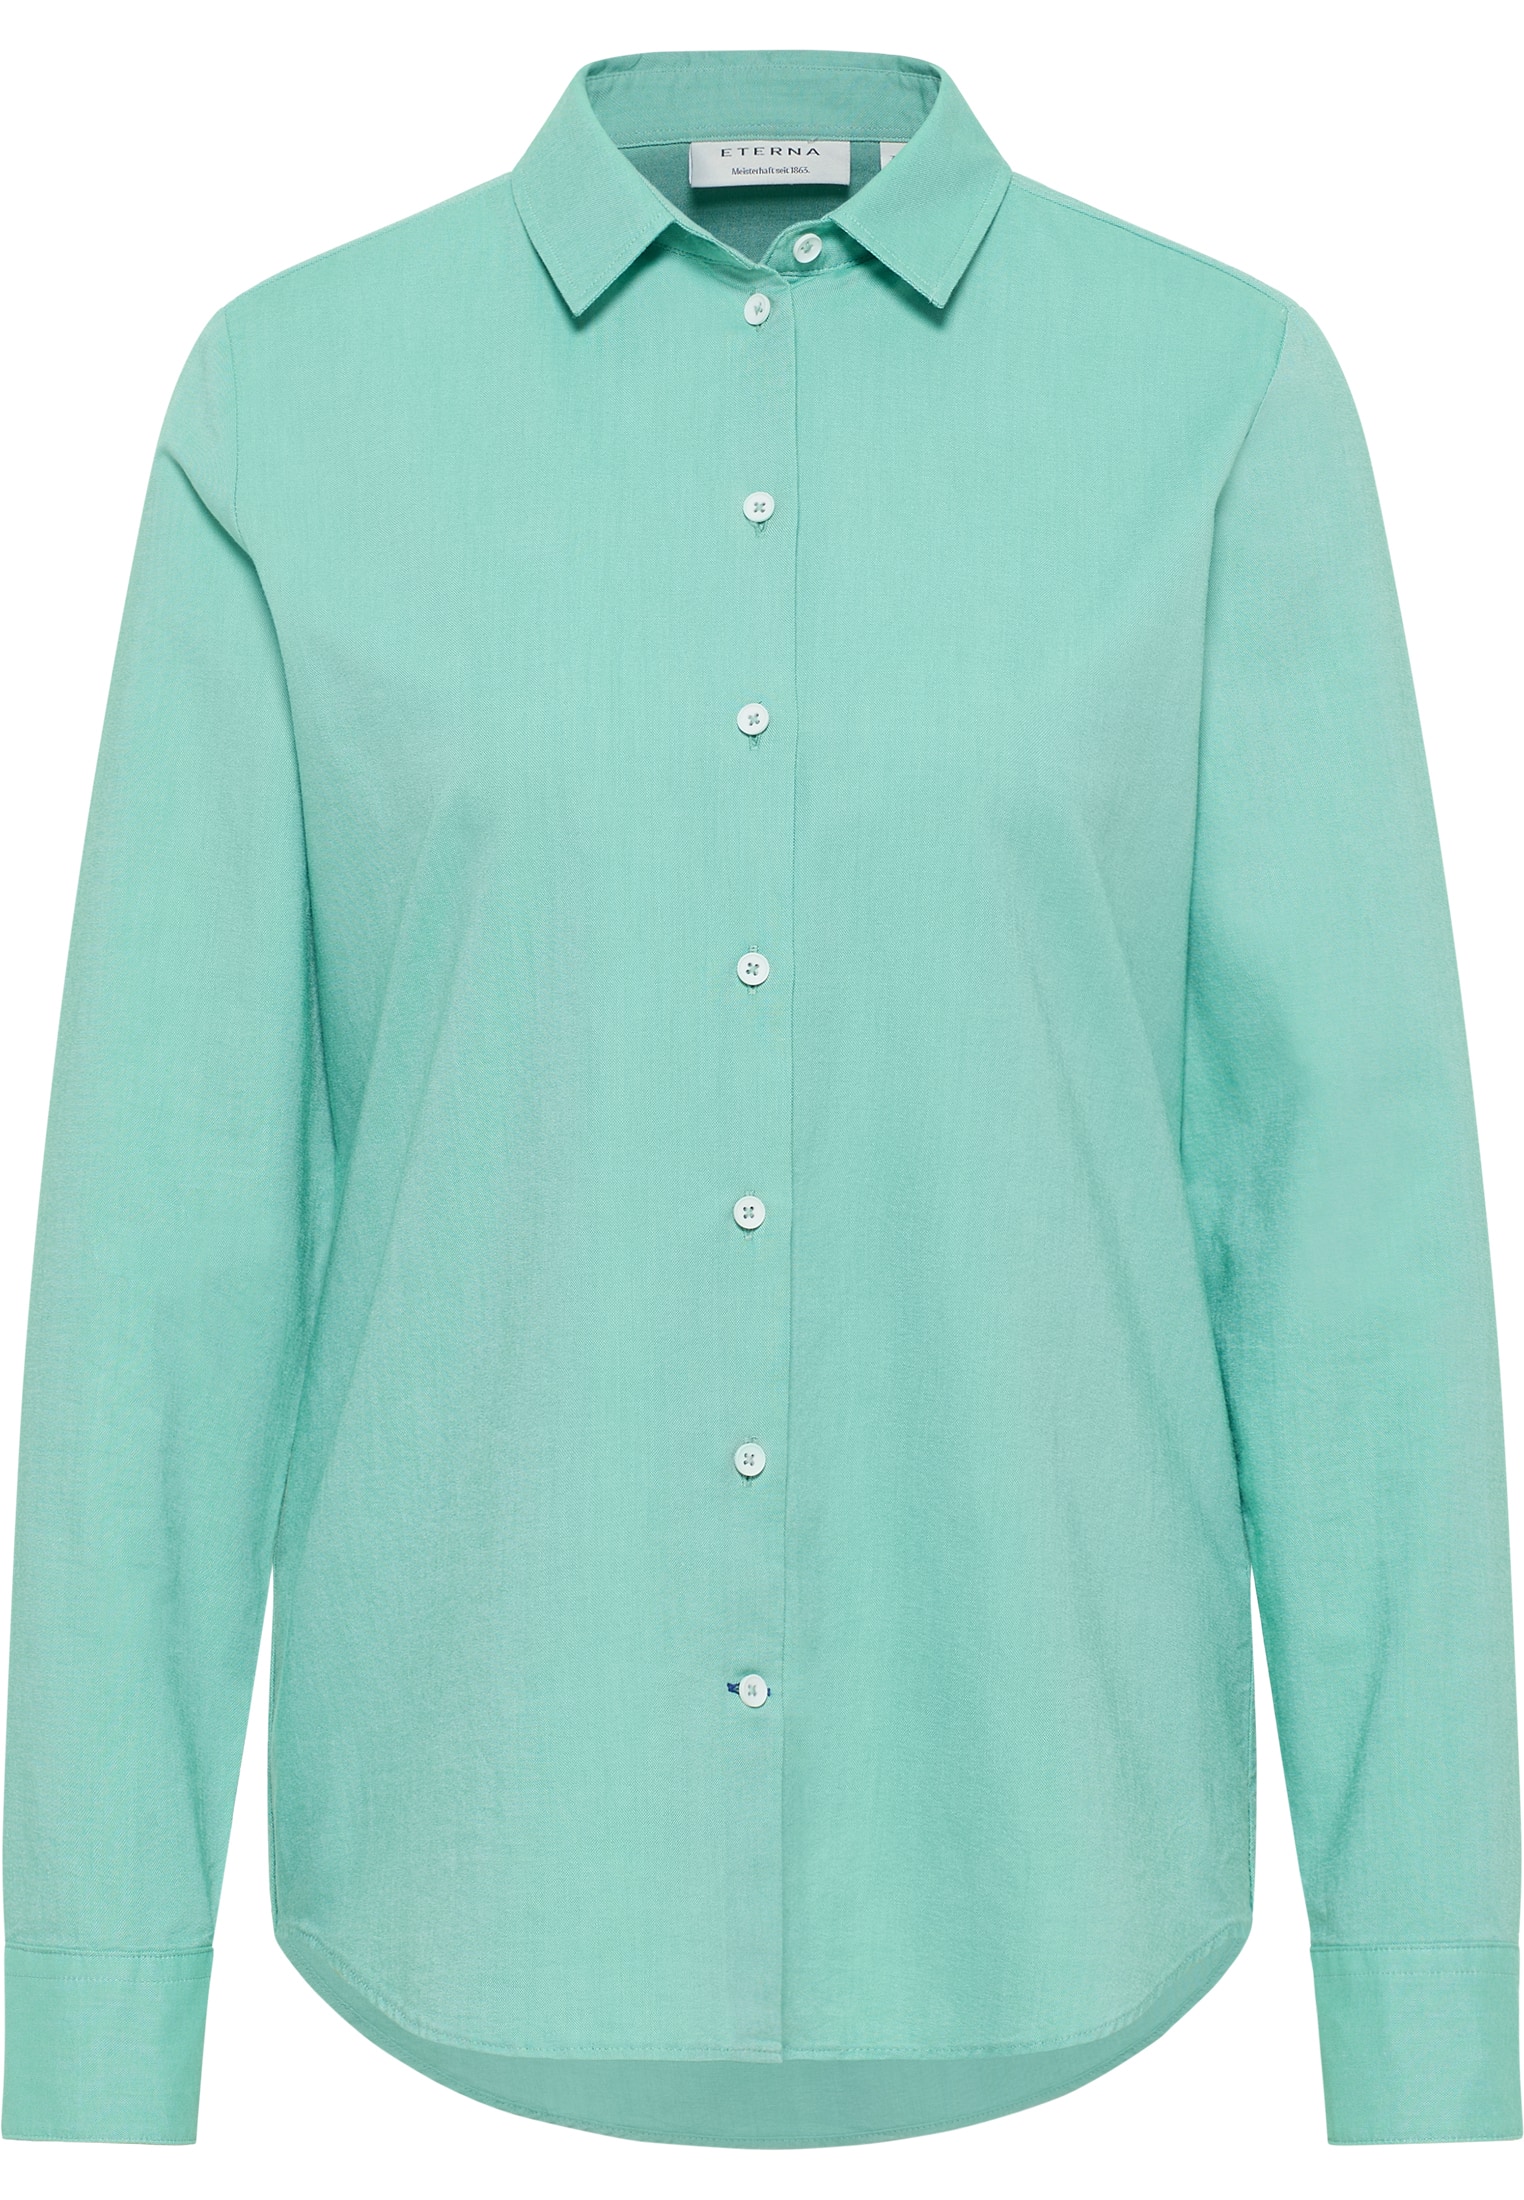 Oxford Shirt Bluse | 2BL04173-04-02-50-1/1 hellgrün | Langarm | unifarben hellgrün | in 50